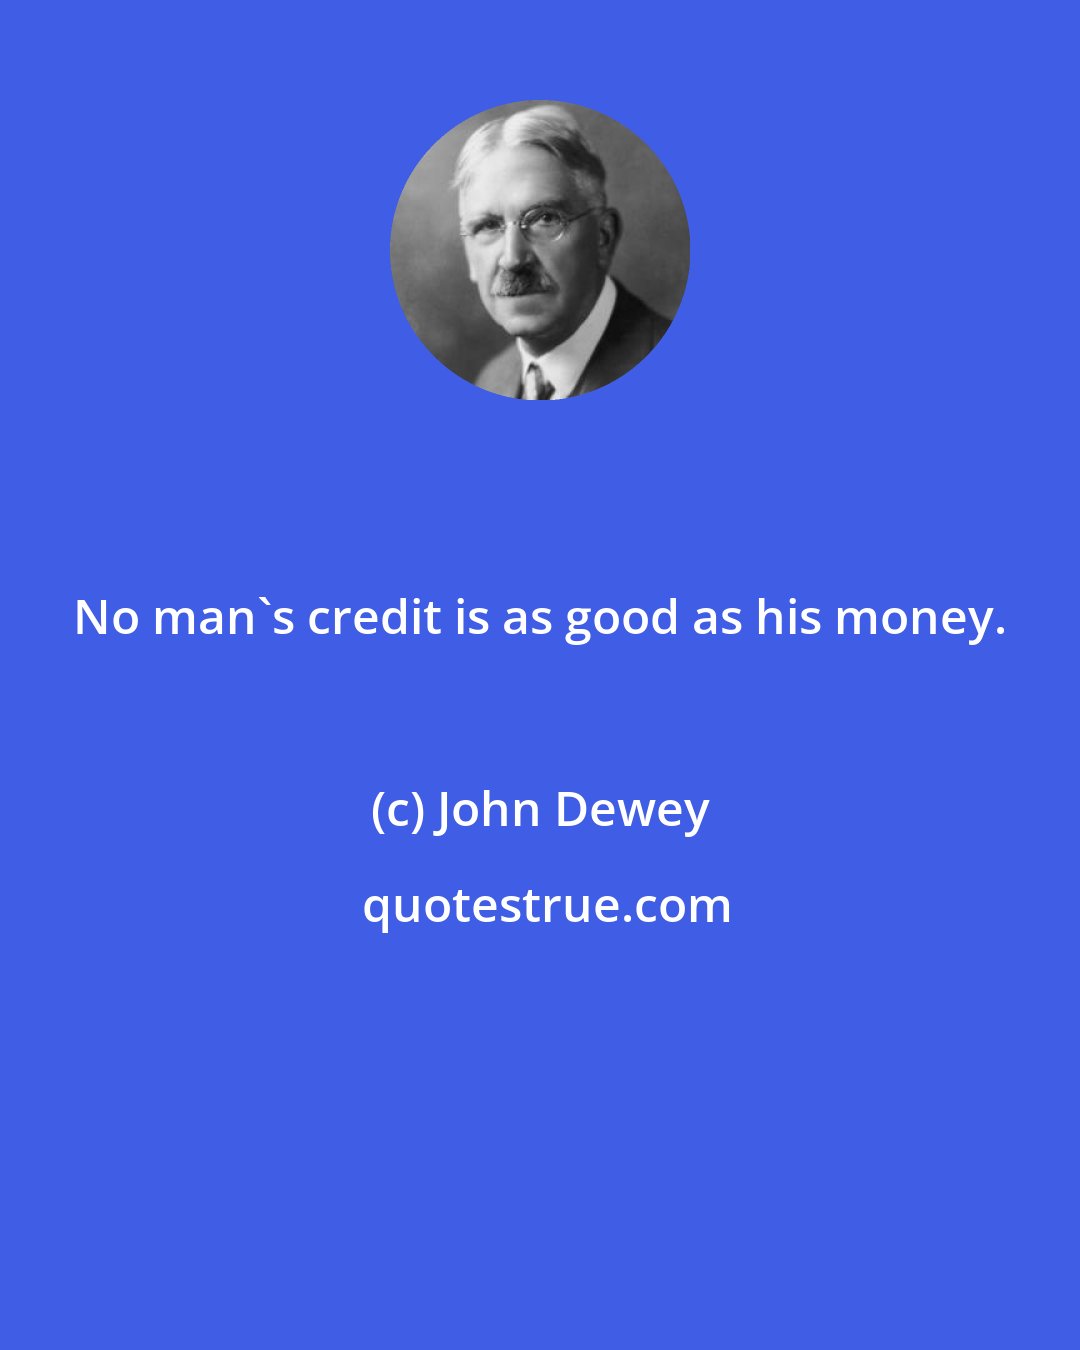 John Dewey: No man's credit is as good as his money.